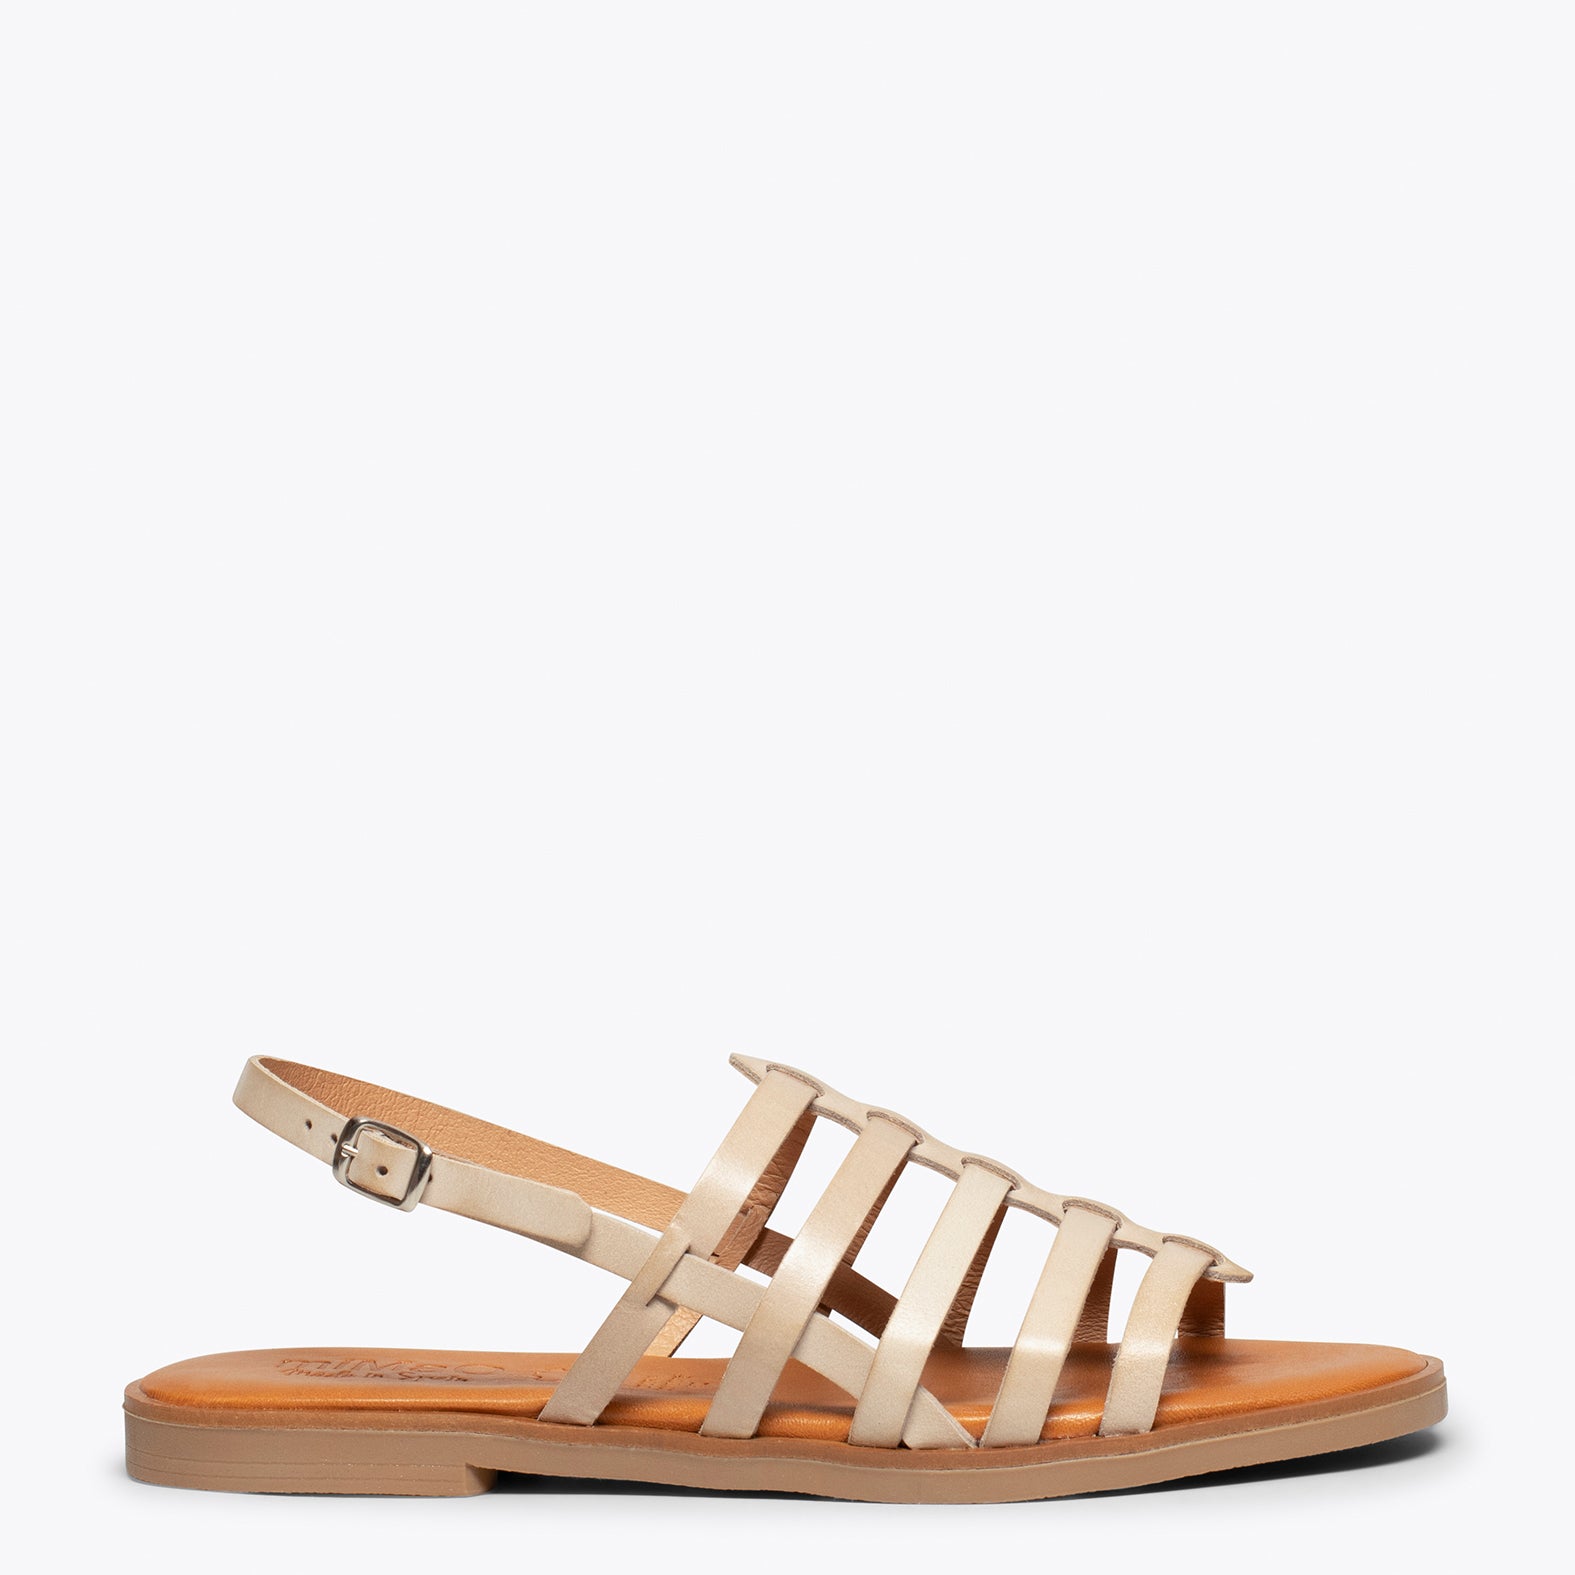 MERIDA -BEIGE roman style flat sandals